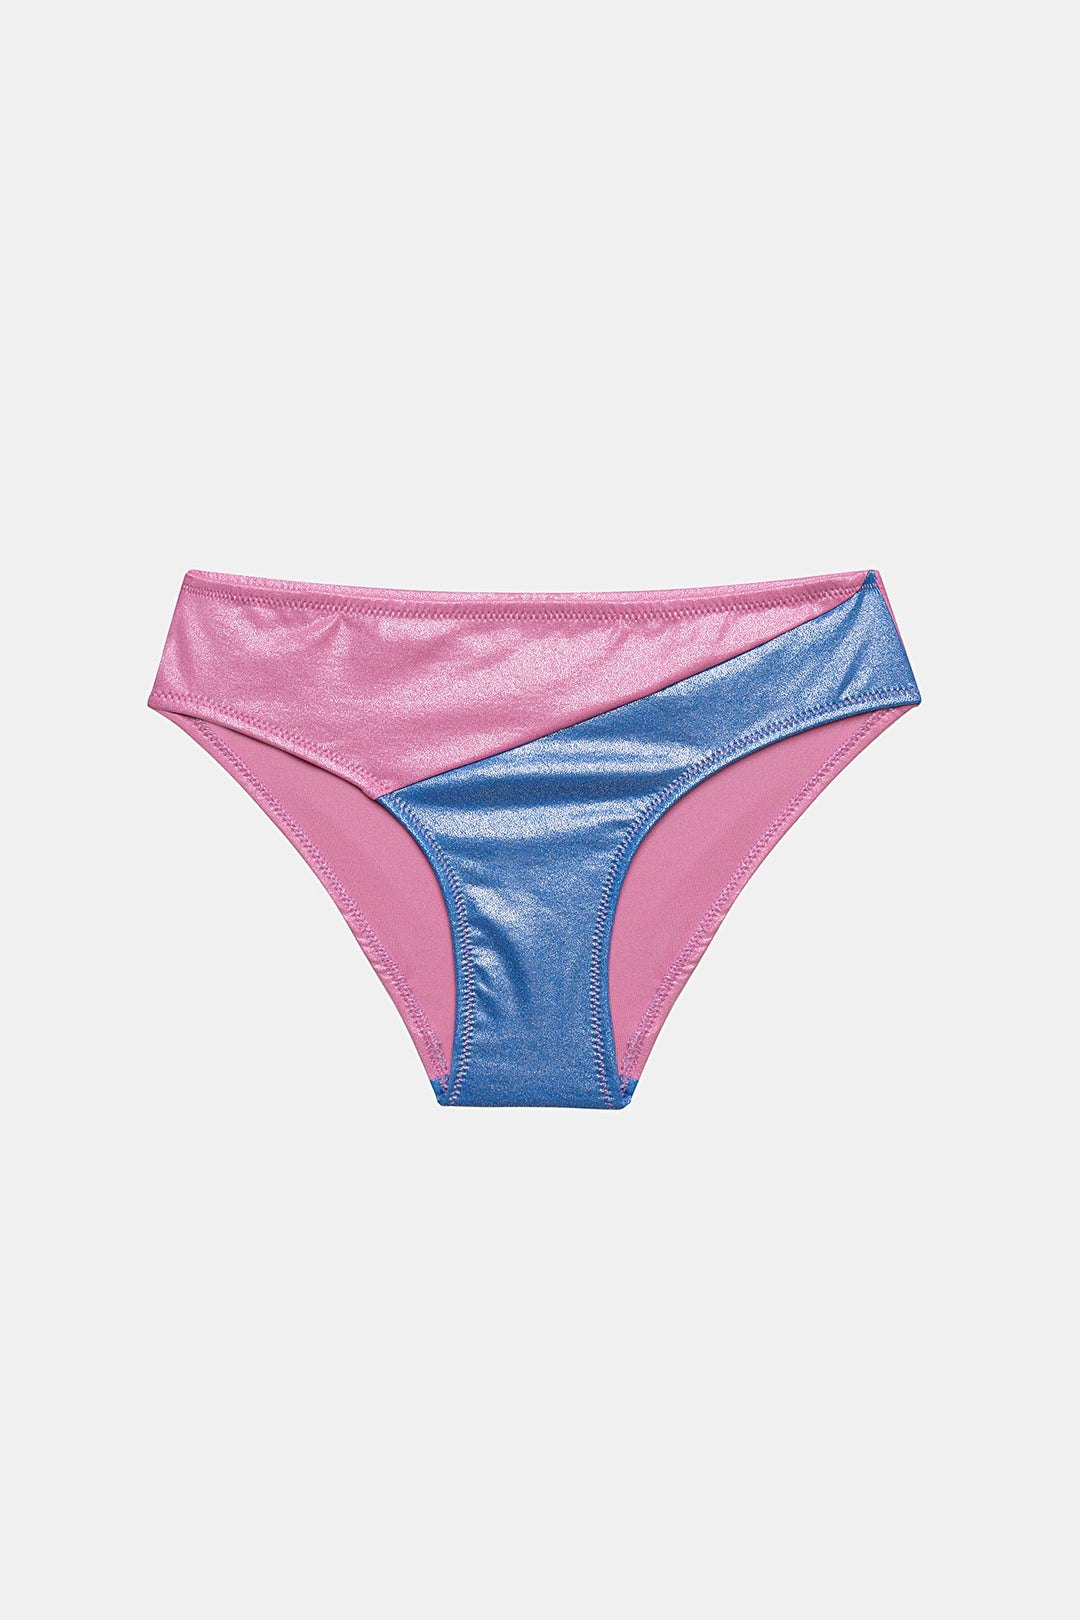 Teen Shiny Wrapy Multi Color Triangle Bikini Set